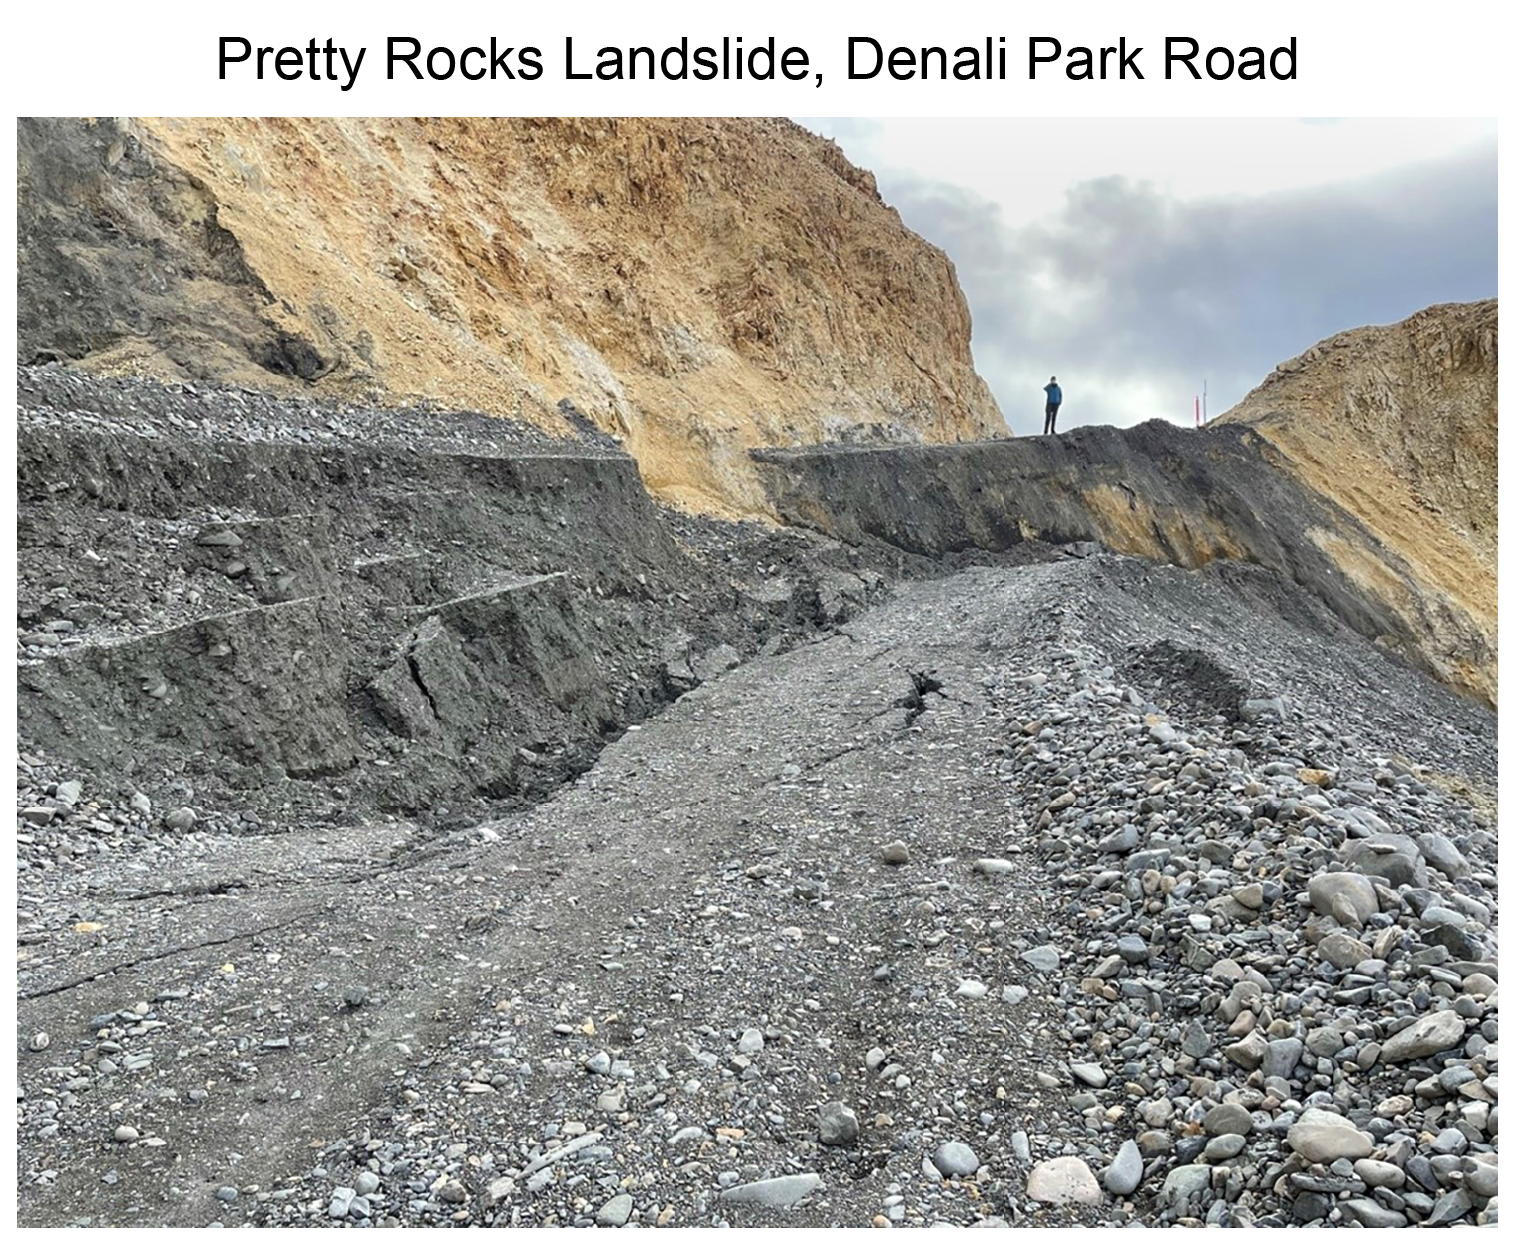 Pretty Rocks Landslide, Denali Park Road